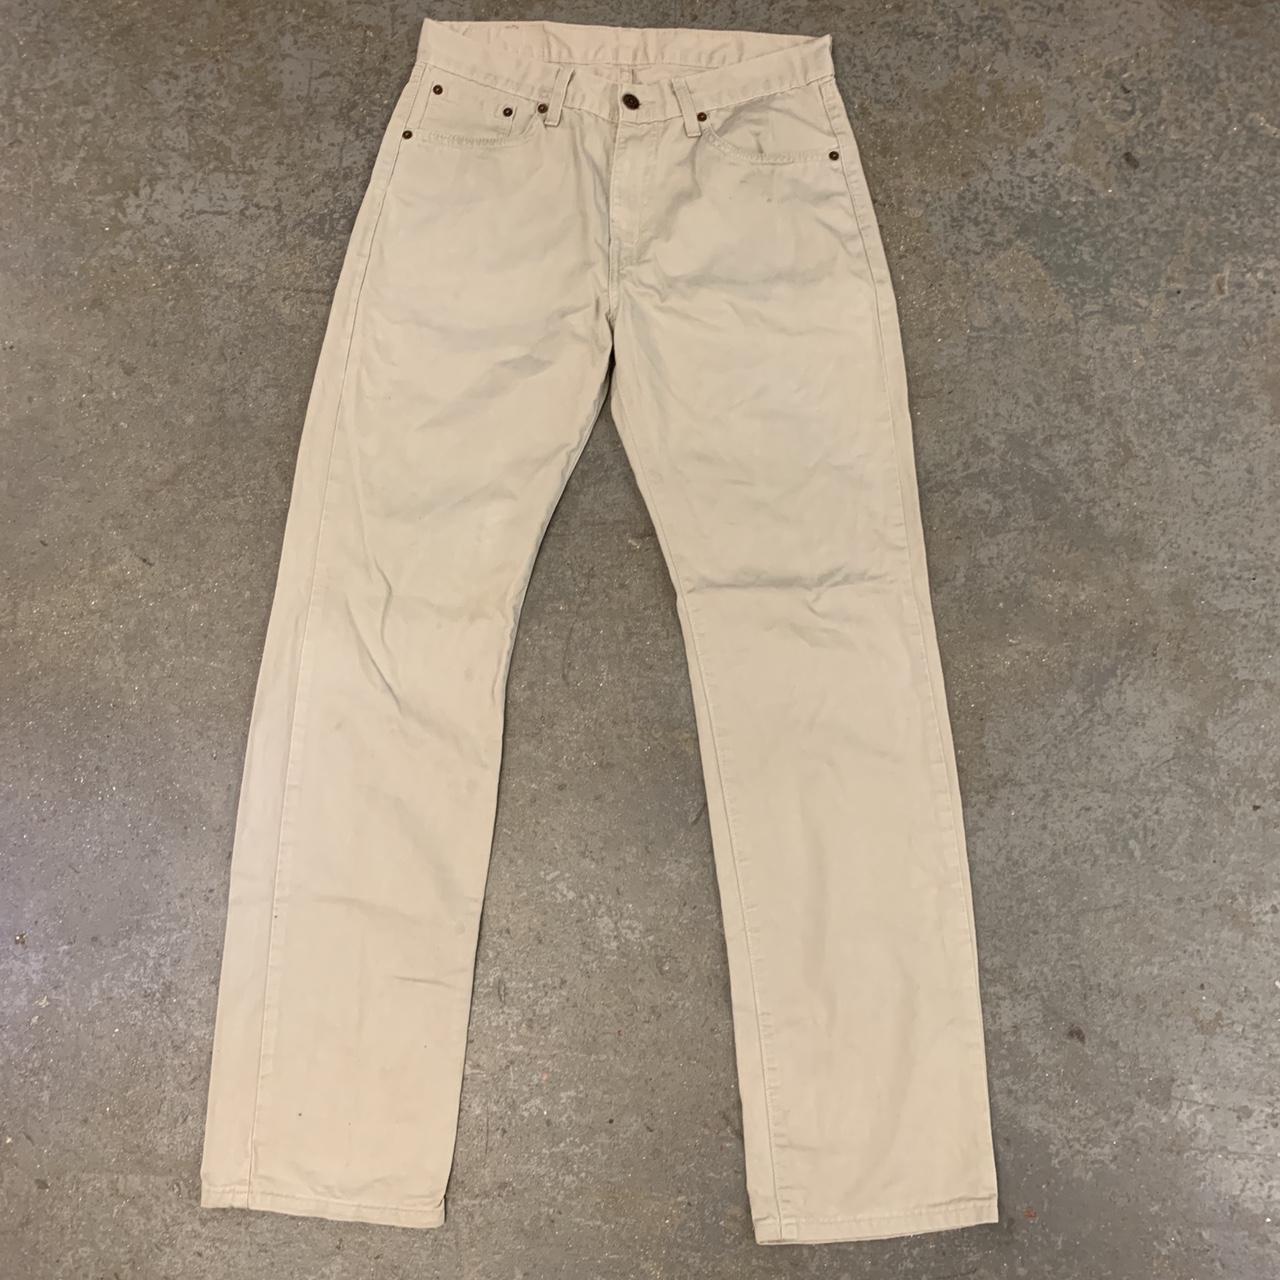 Vintage Levi’s 581 Jeans in Cream. Size: Waist 32